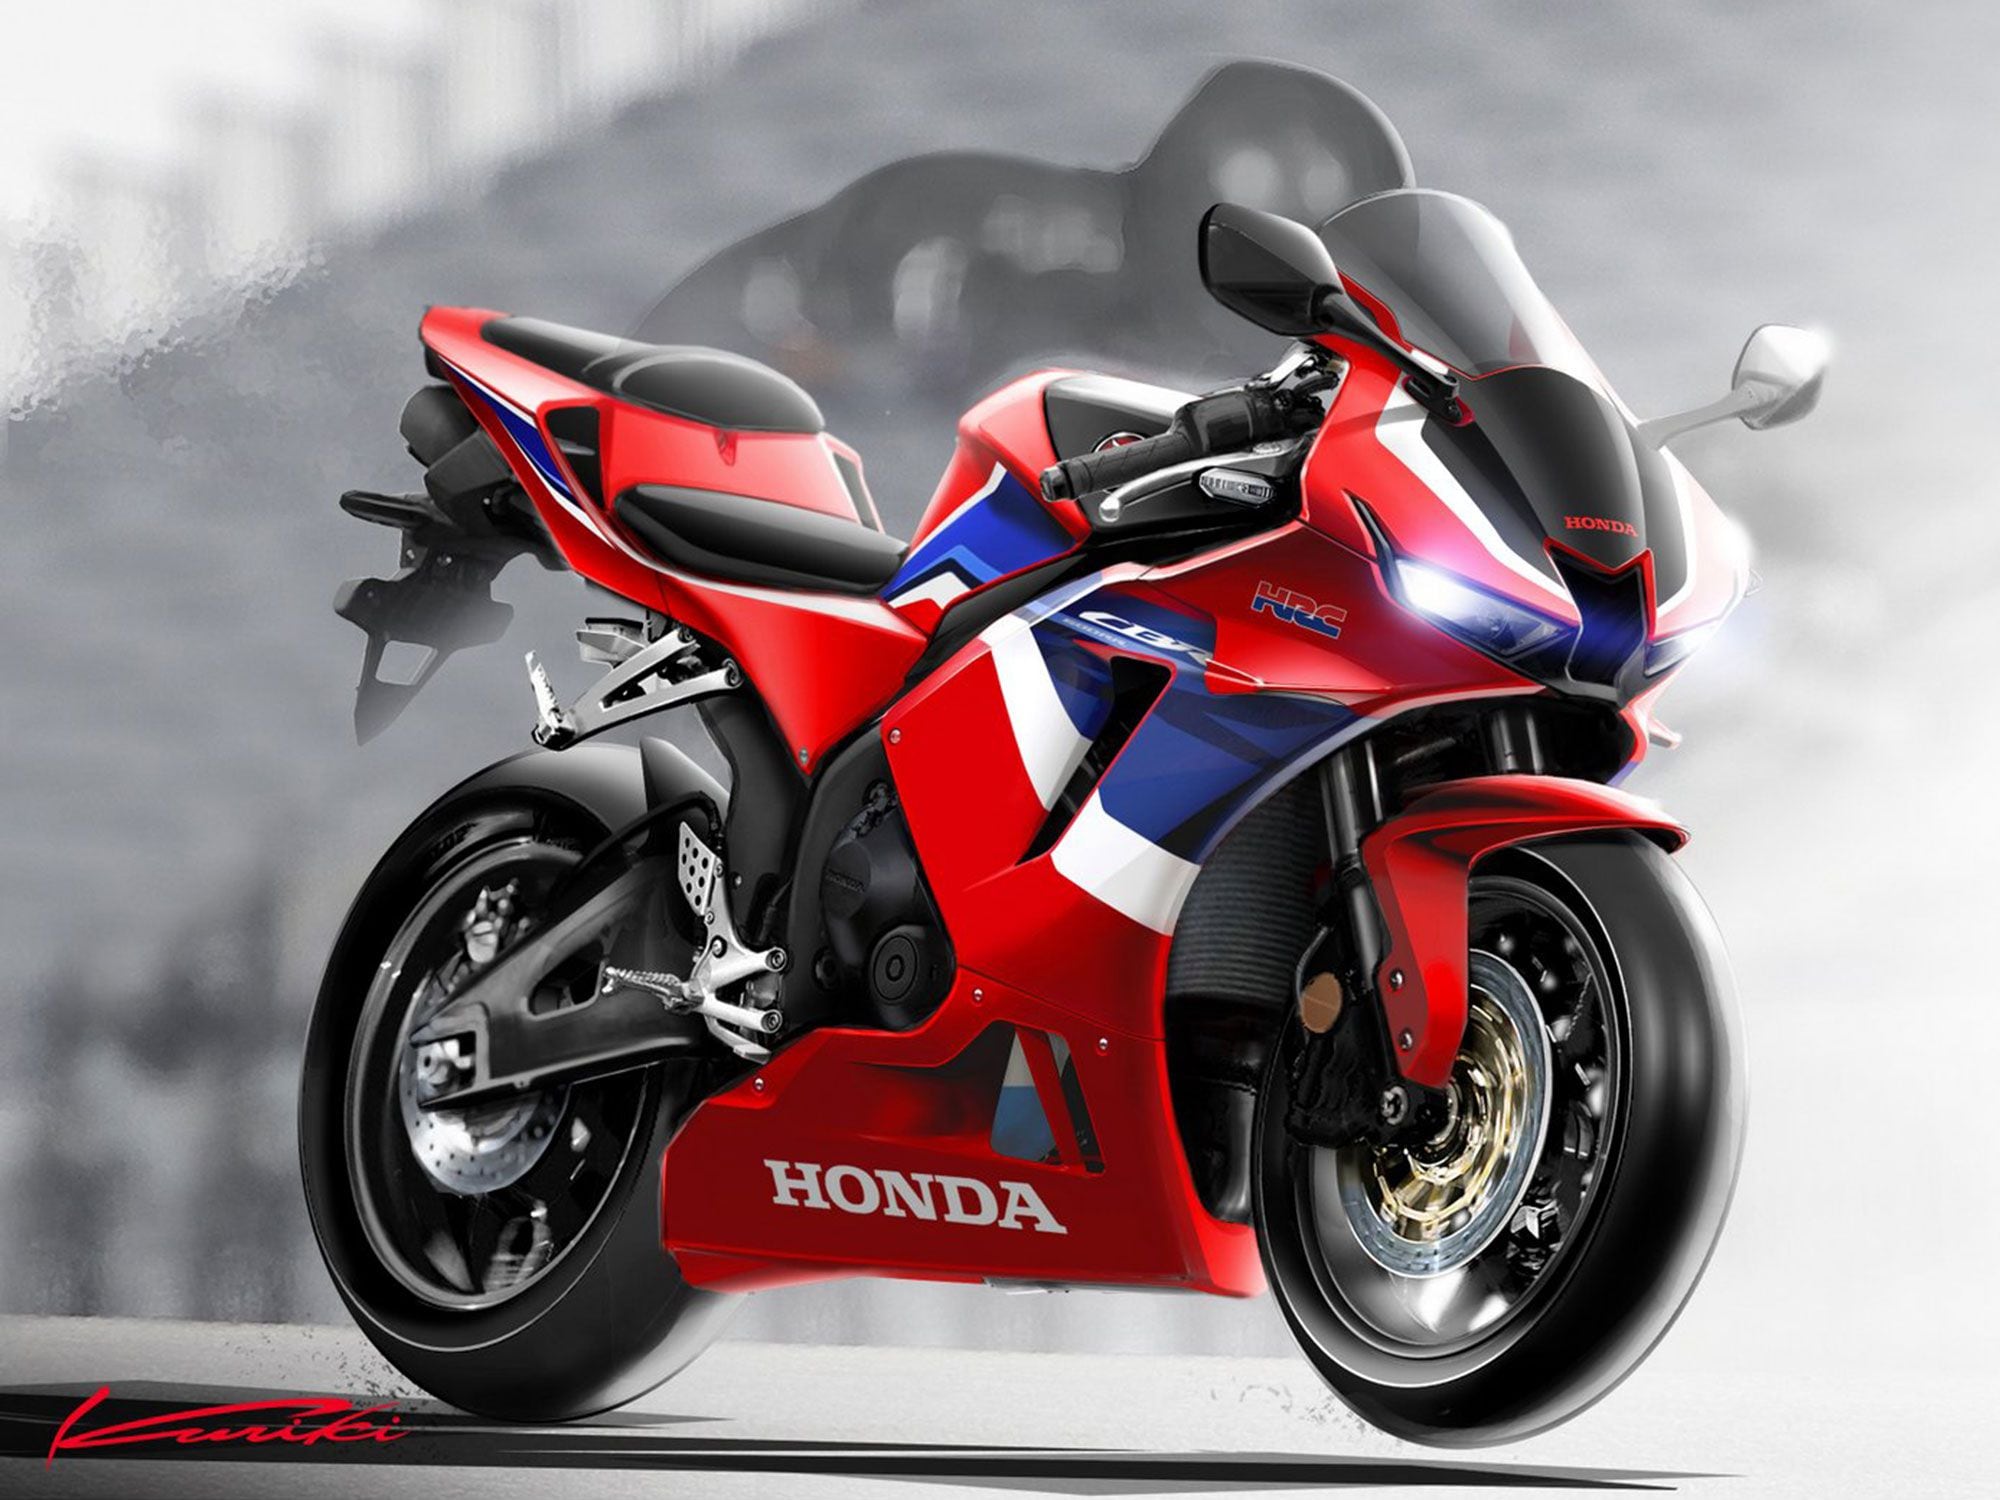 HONDA Team Racing Banner Personalized CBR600rr Repsol Super Bike Motorcycle